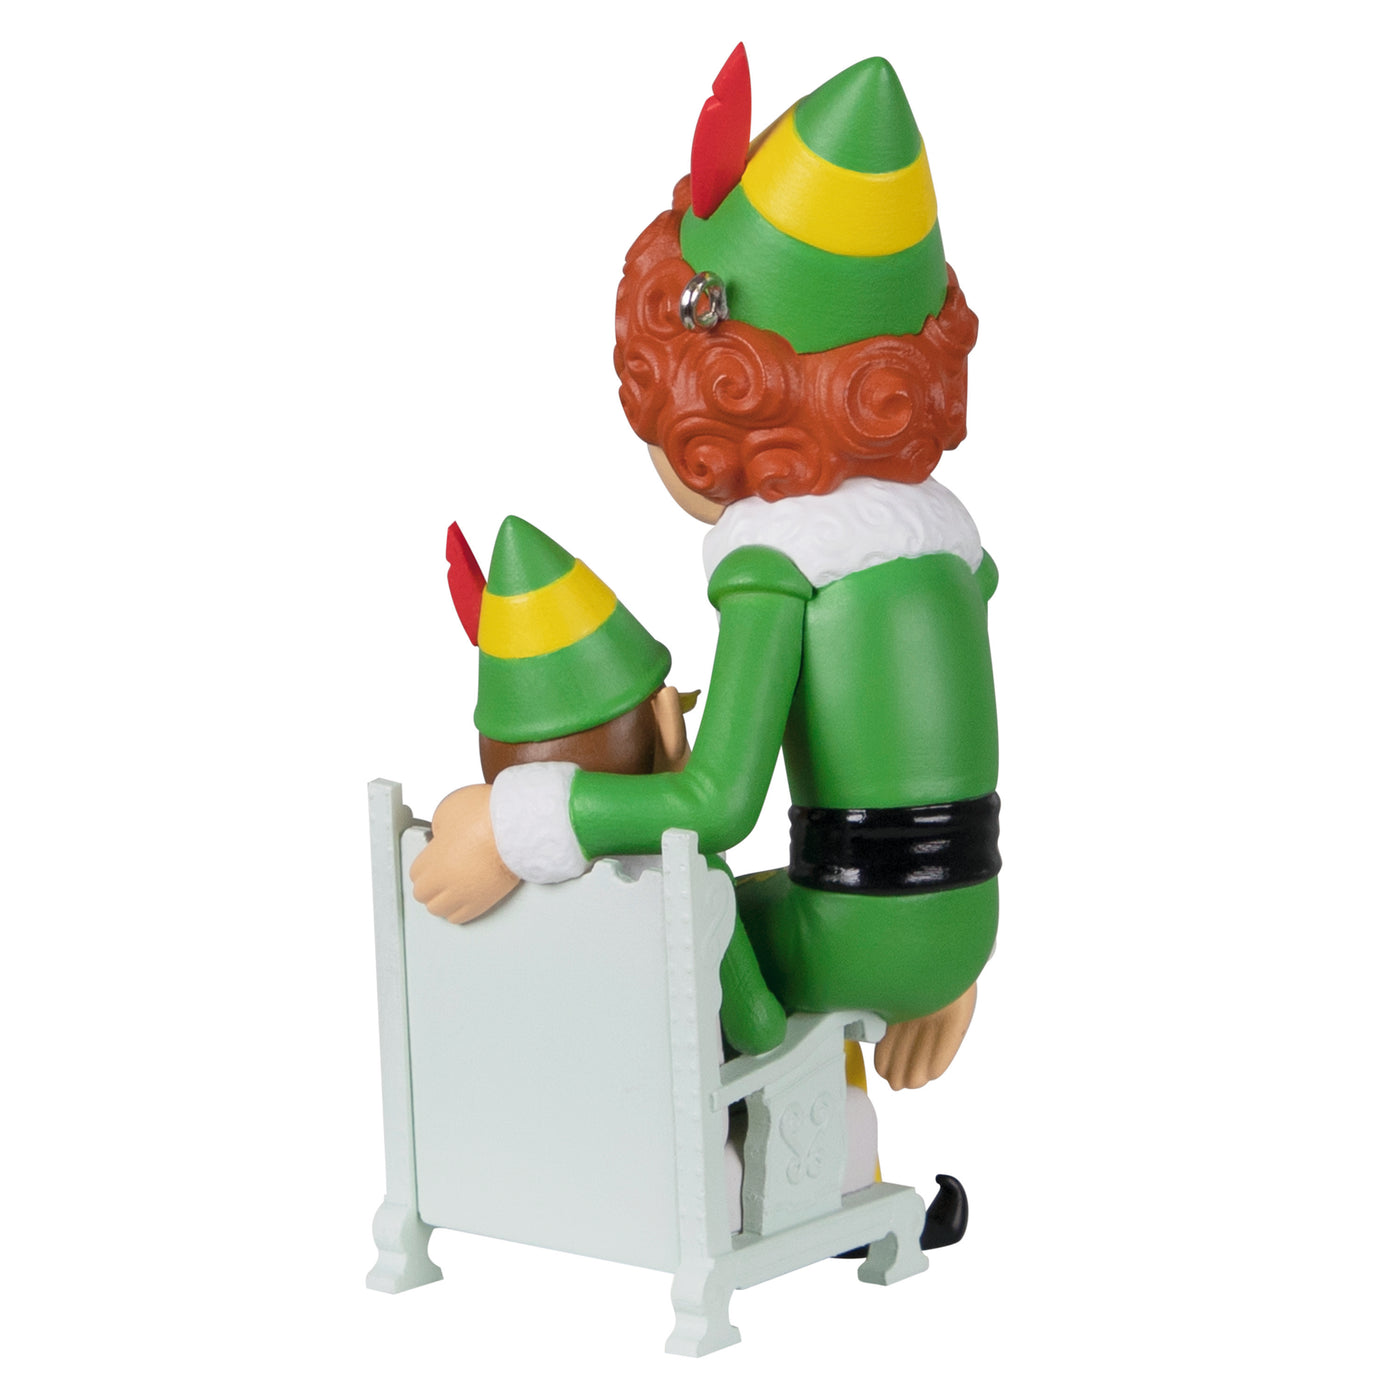 Elf: Buddy and Papa elf Ornament